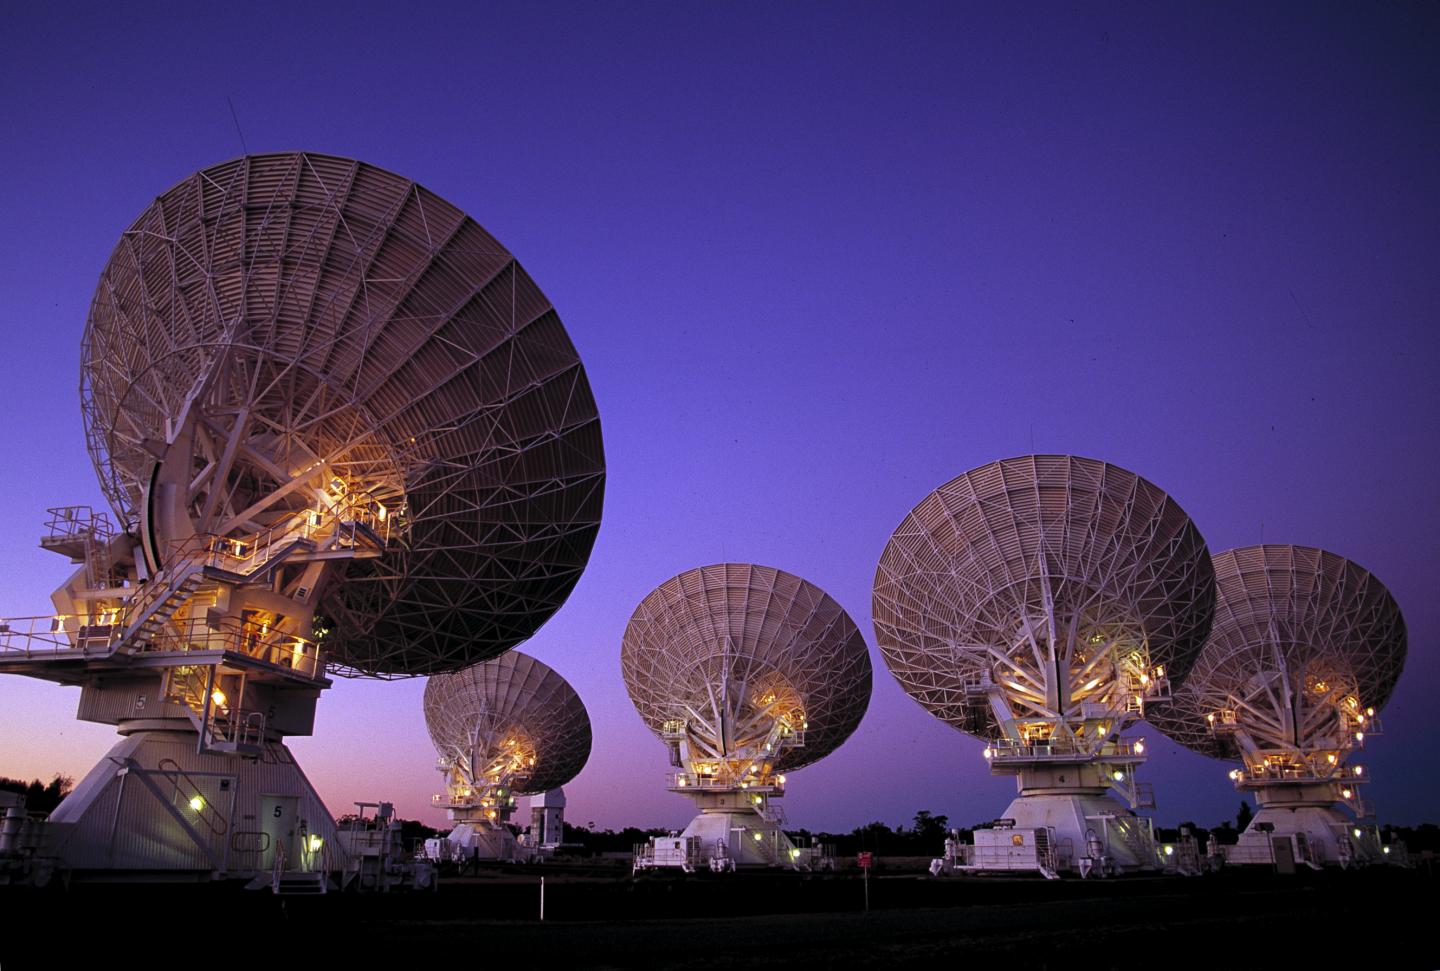 The CSIRO Australia Telescope Compact Array